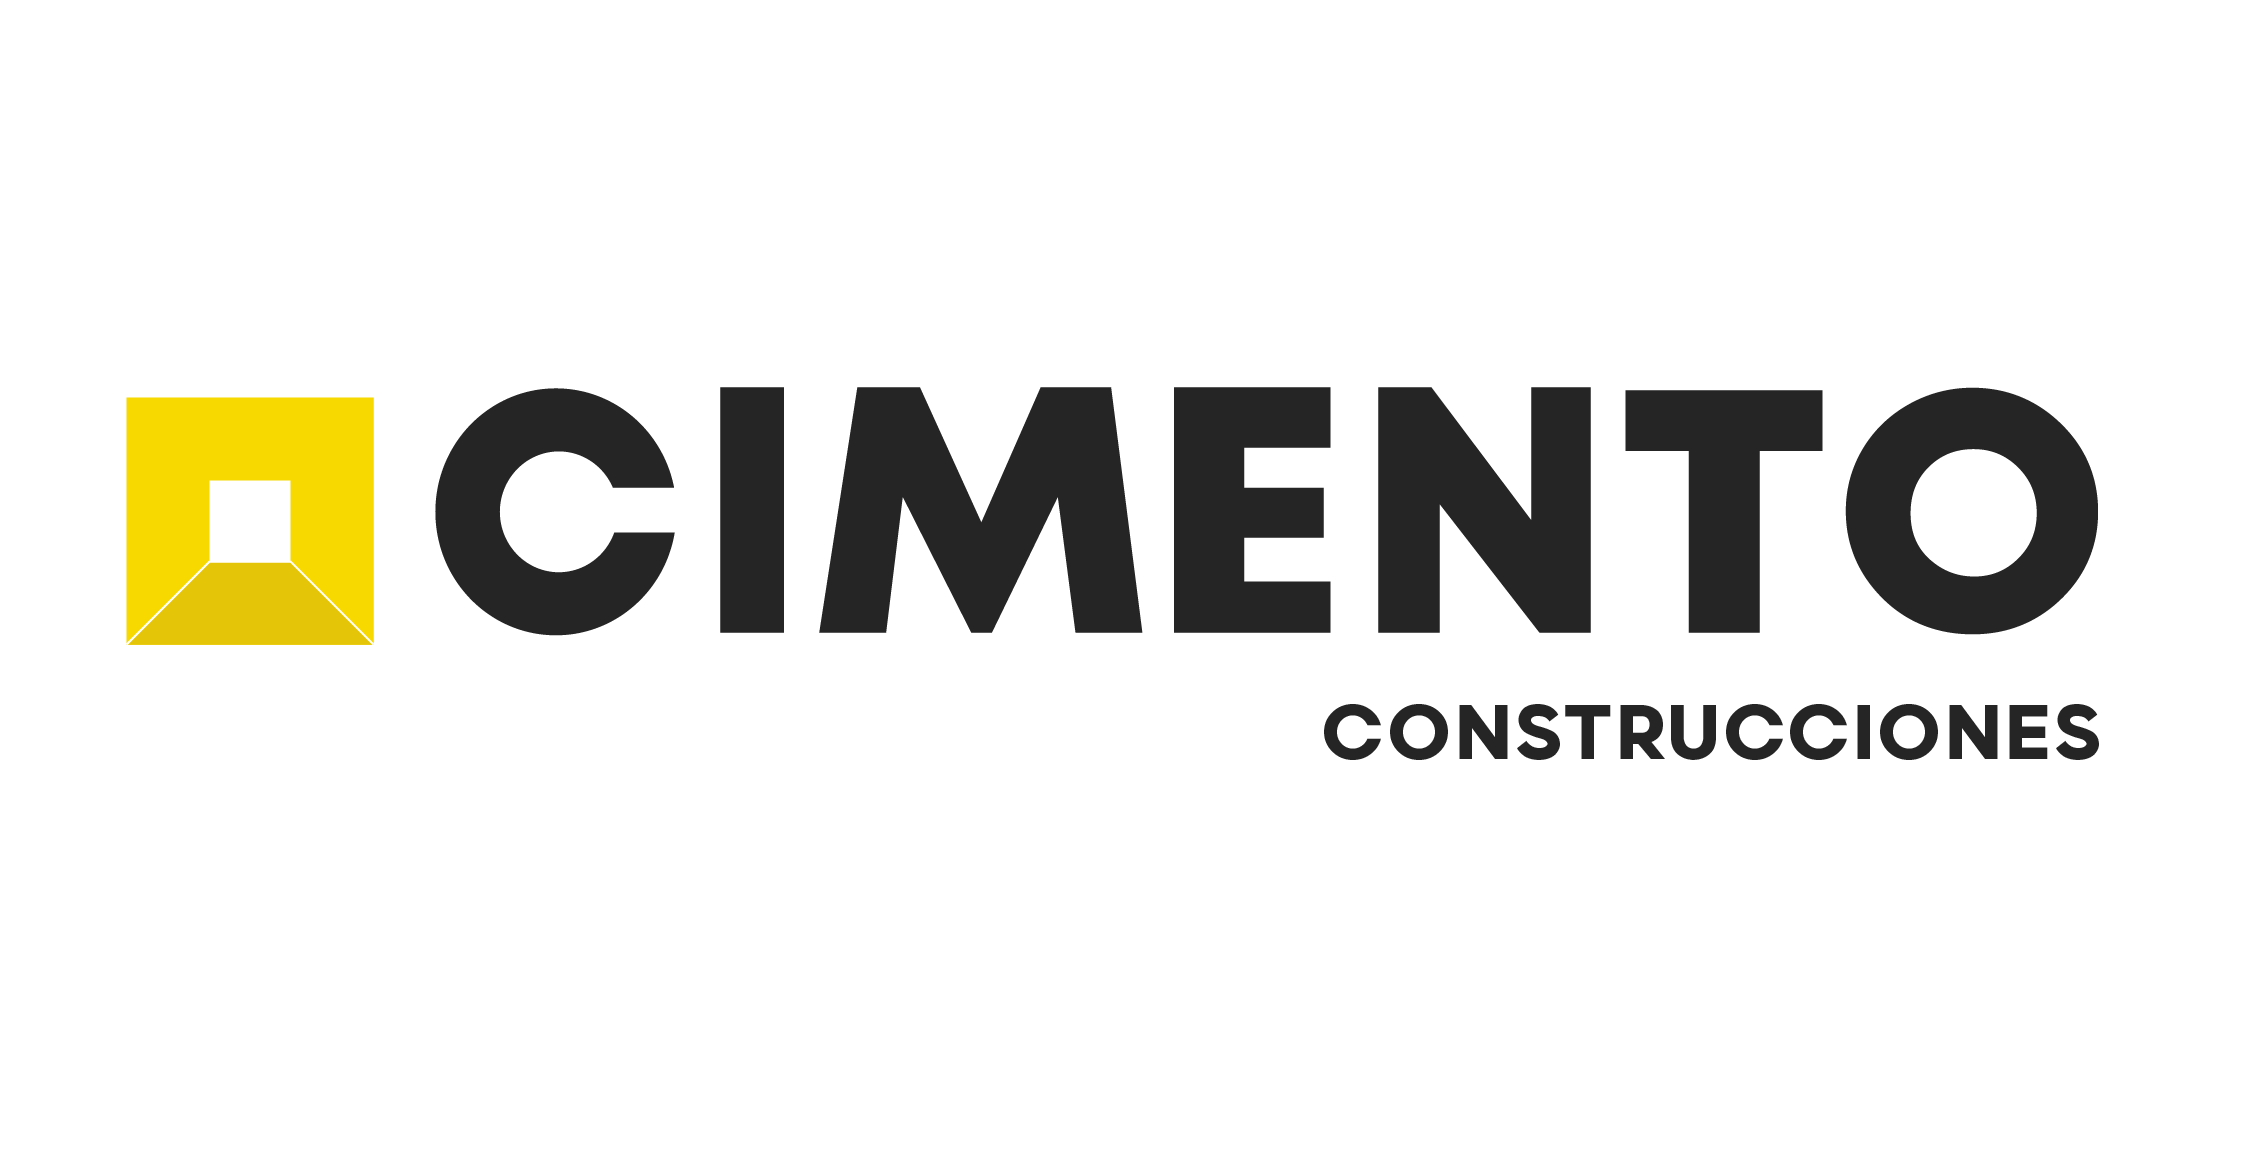 equipamos_cimento